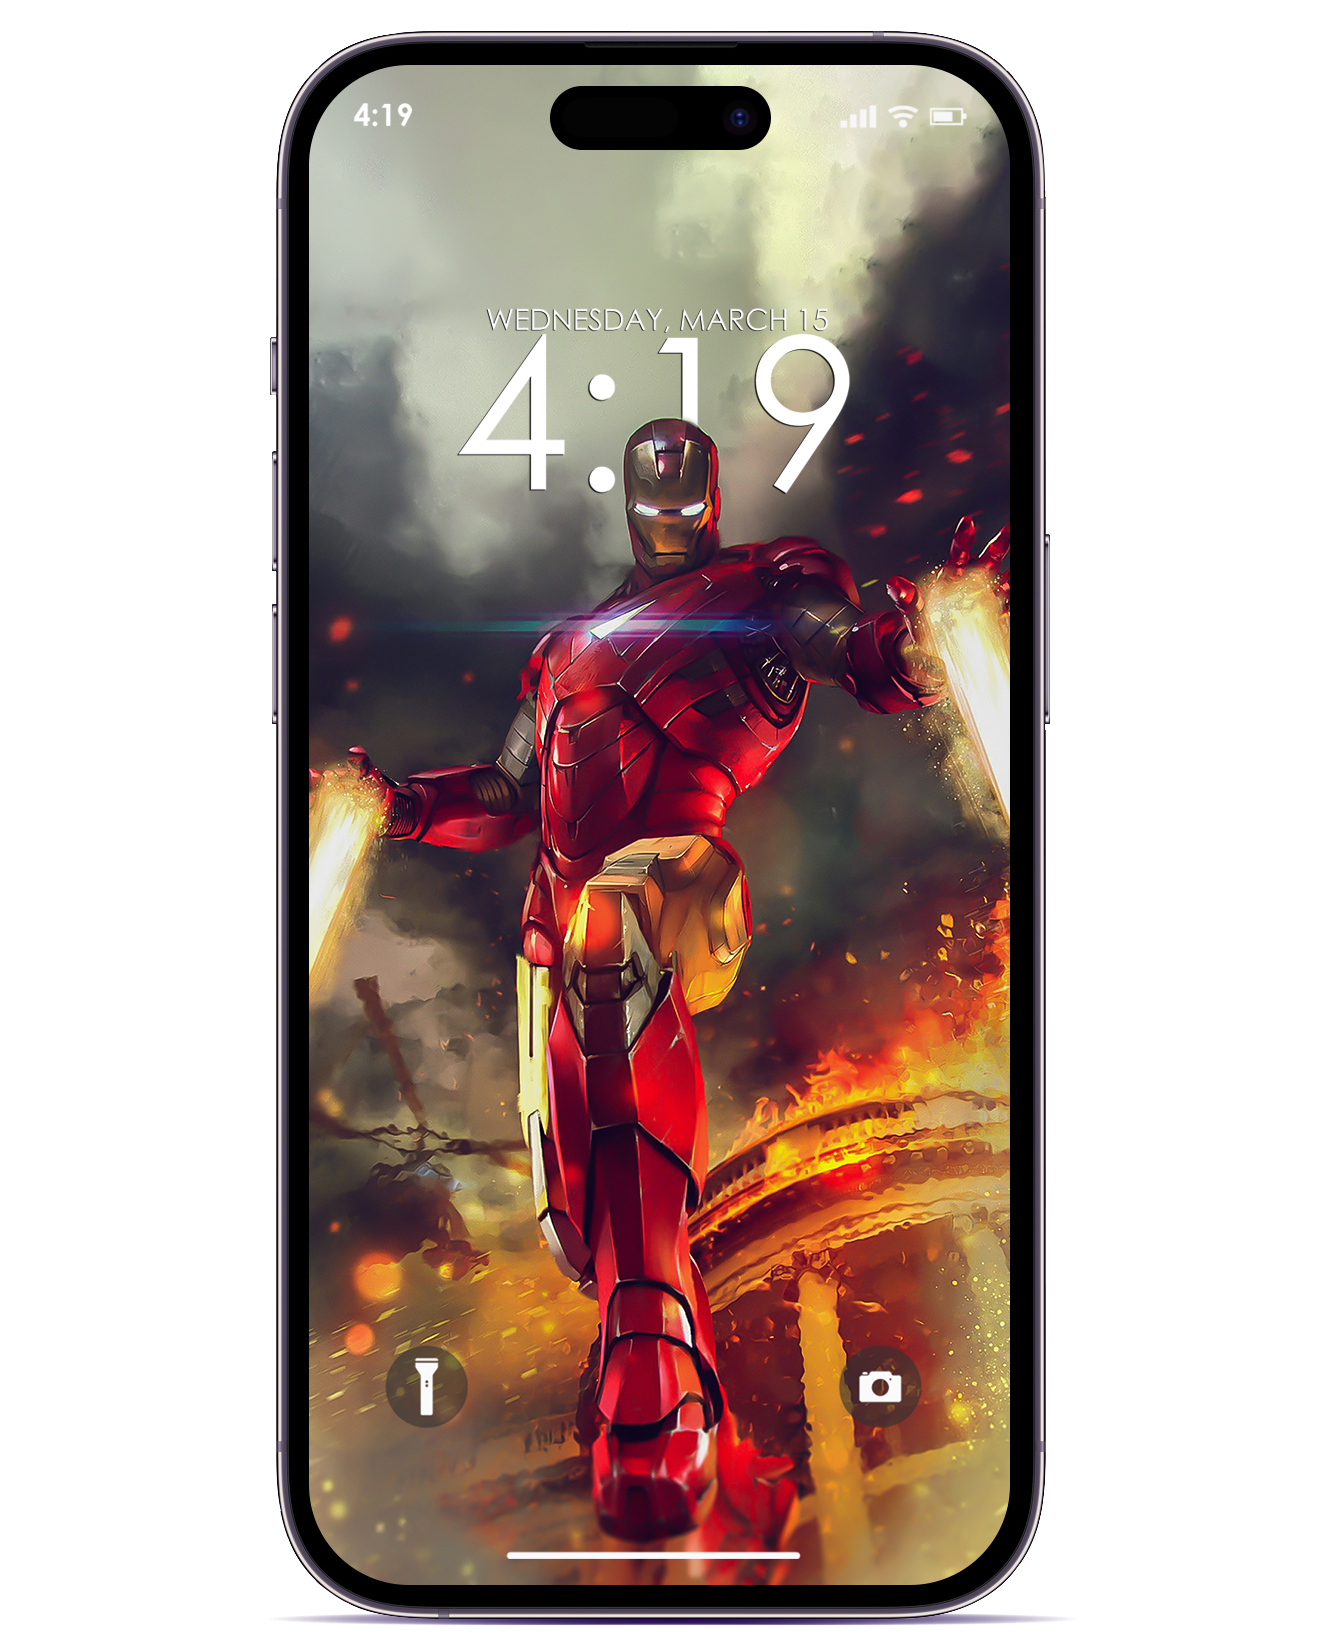 Iron Man Wallpaper IPhone 93 images